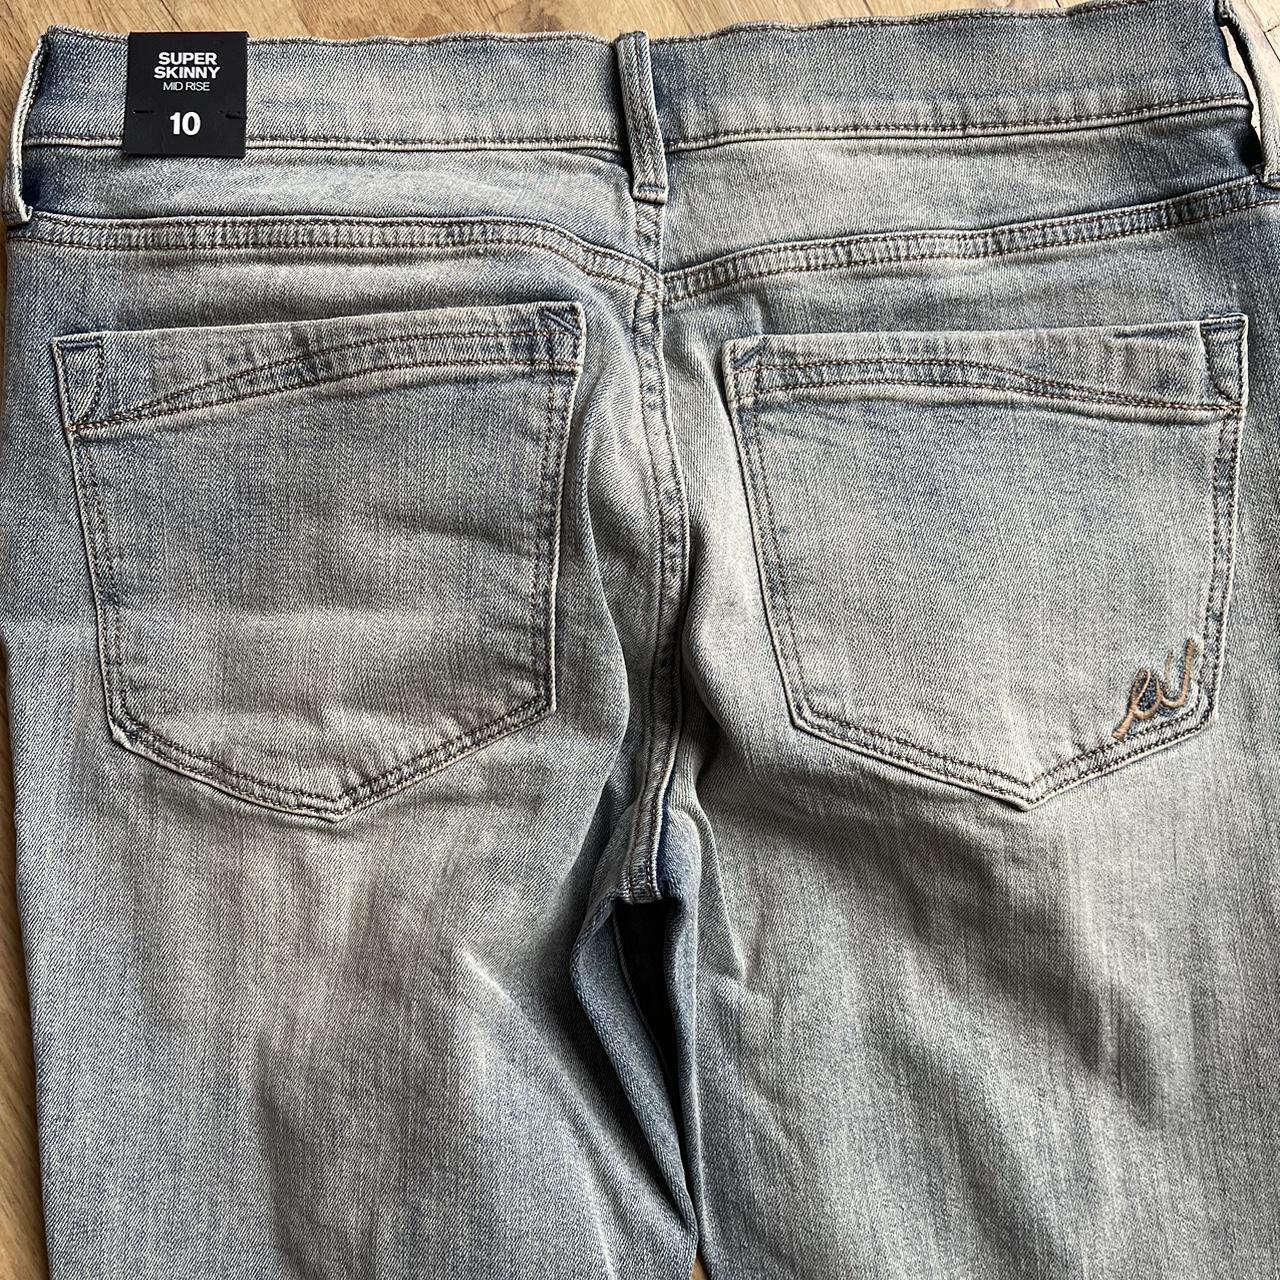 Express jeans, women's size 10, brand new - Depop